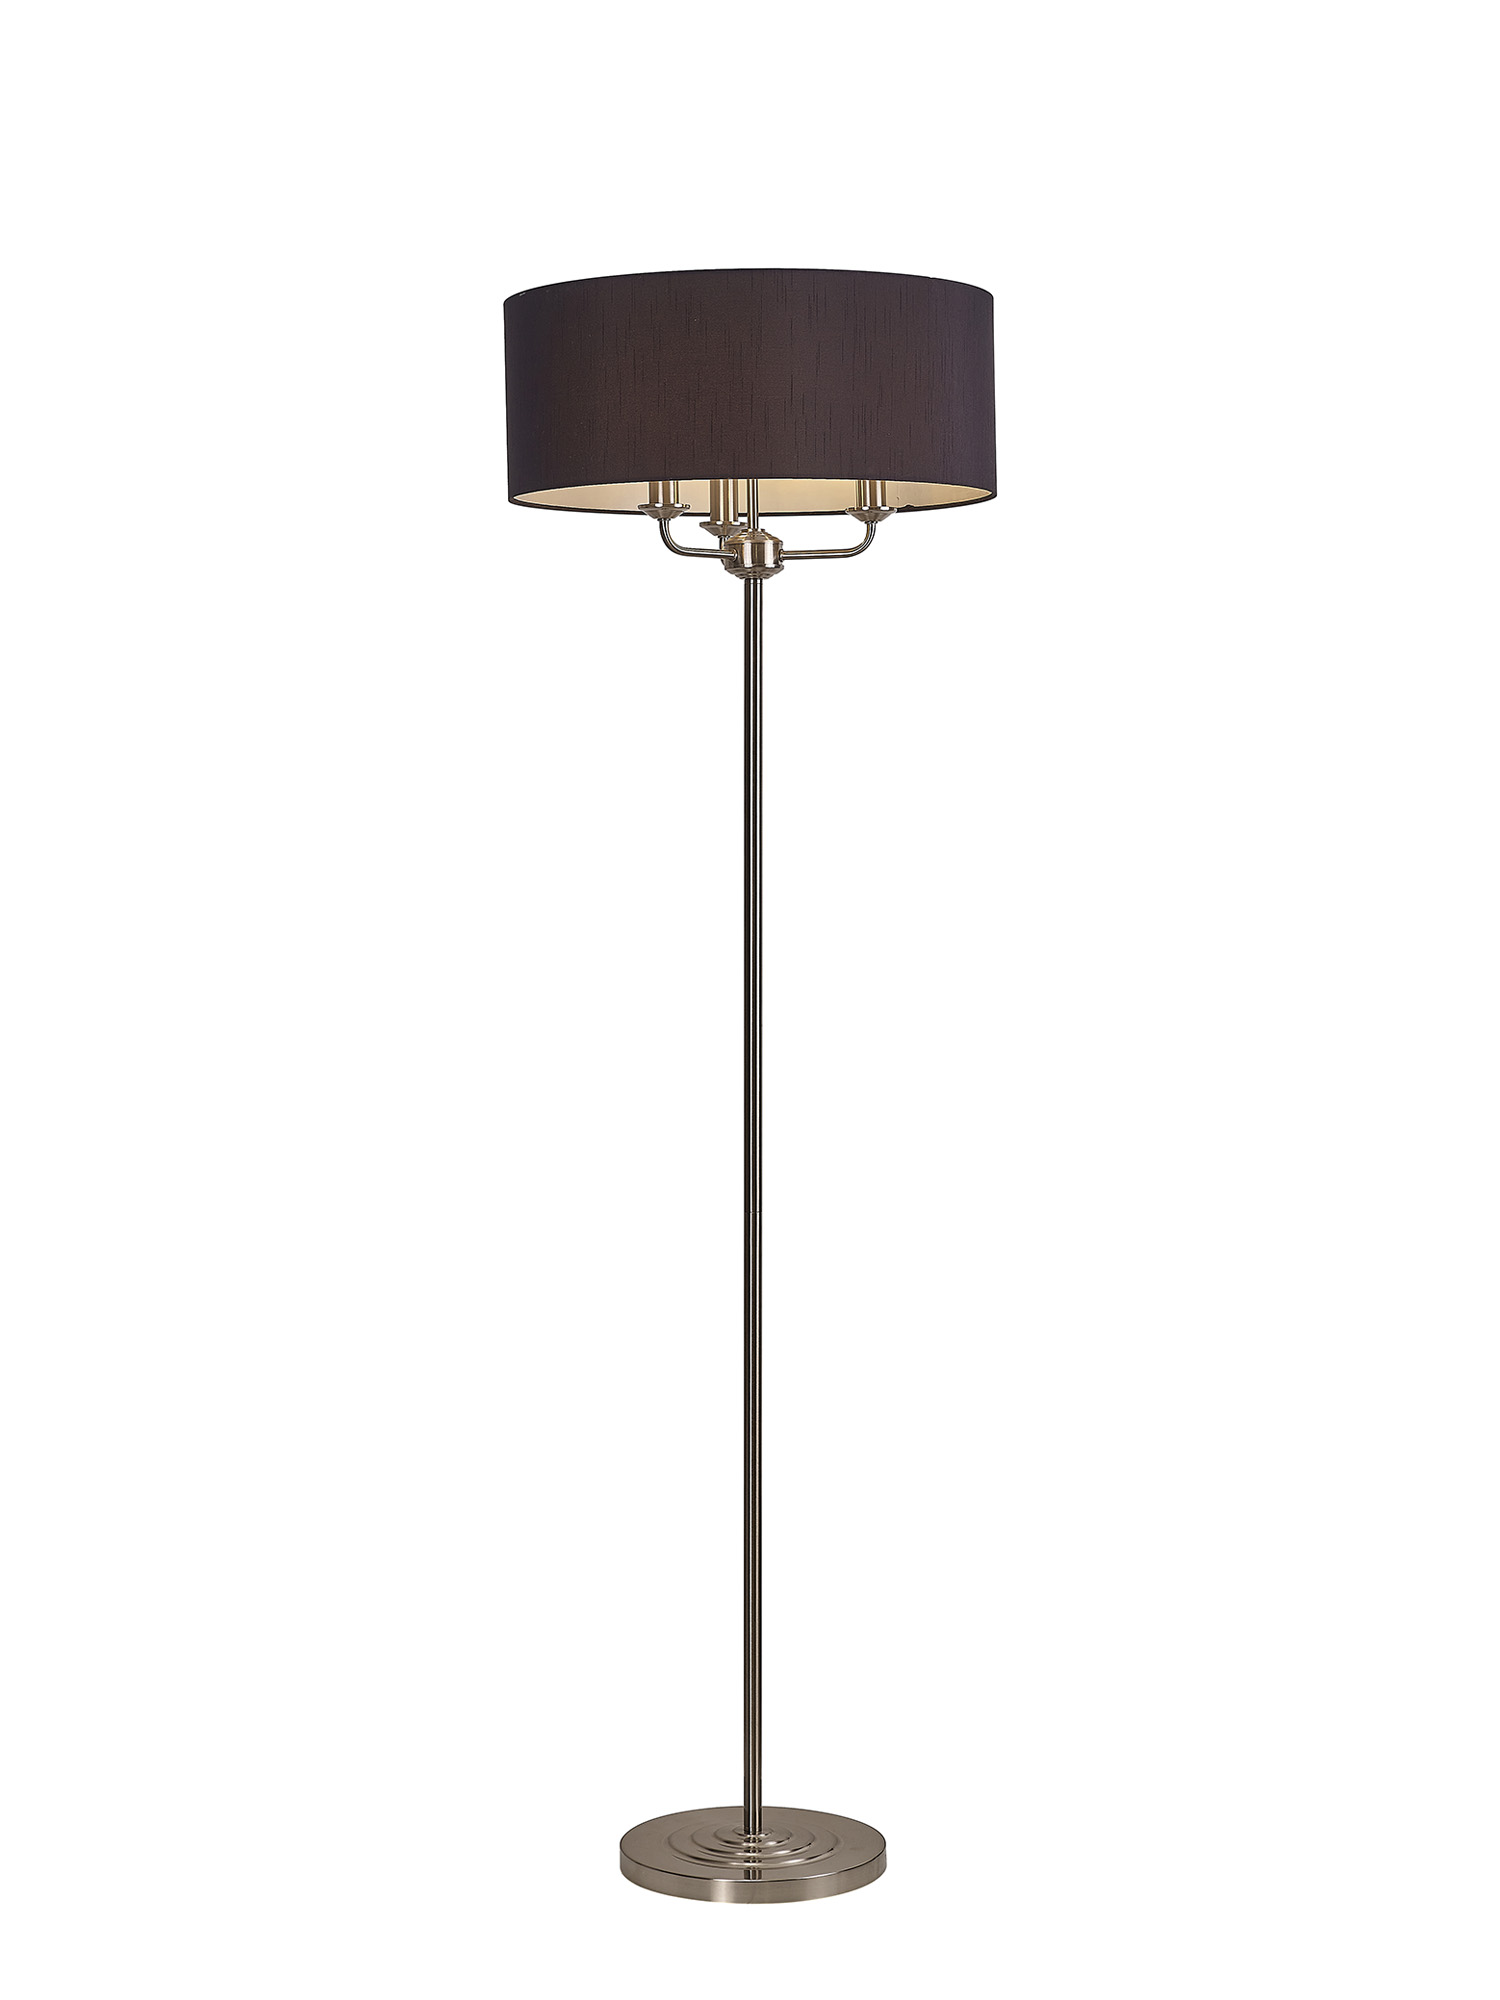 DK0932  Banyan 45cm 3 Light Floor Lamp Satin Nickel, Black